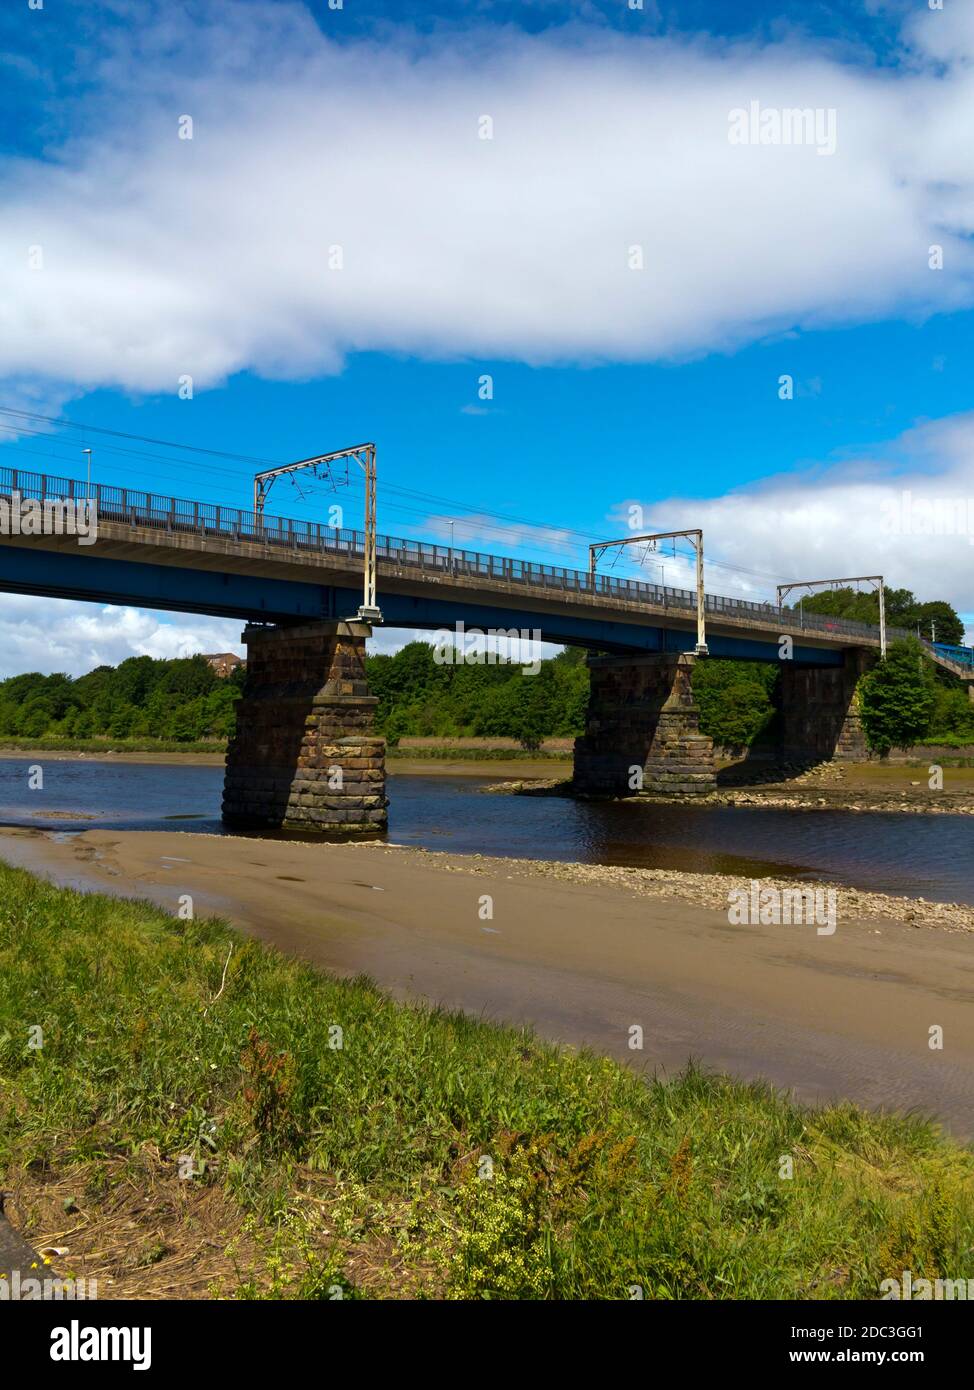 West Coast Mainline Railway Bridge sul fiume Lune a Lancaster una città nel Lancashire nord-ovest Inghilterra UK. Foto Stock